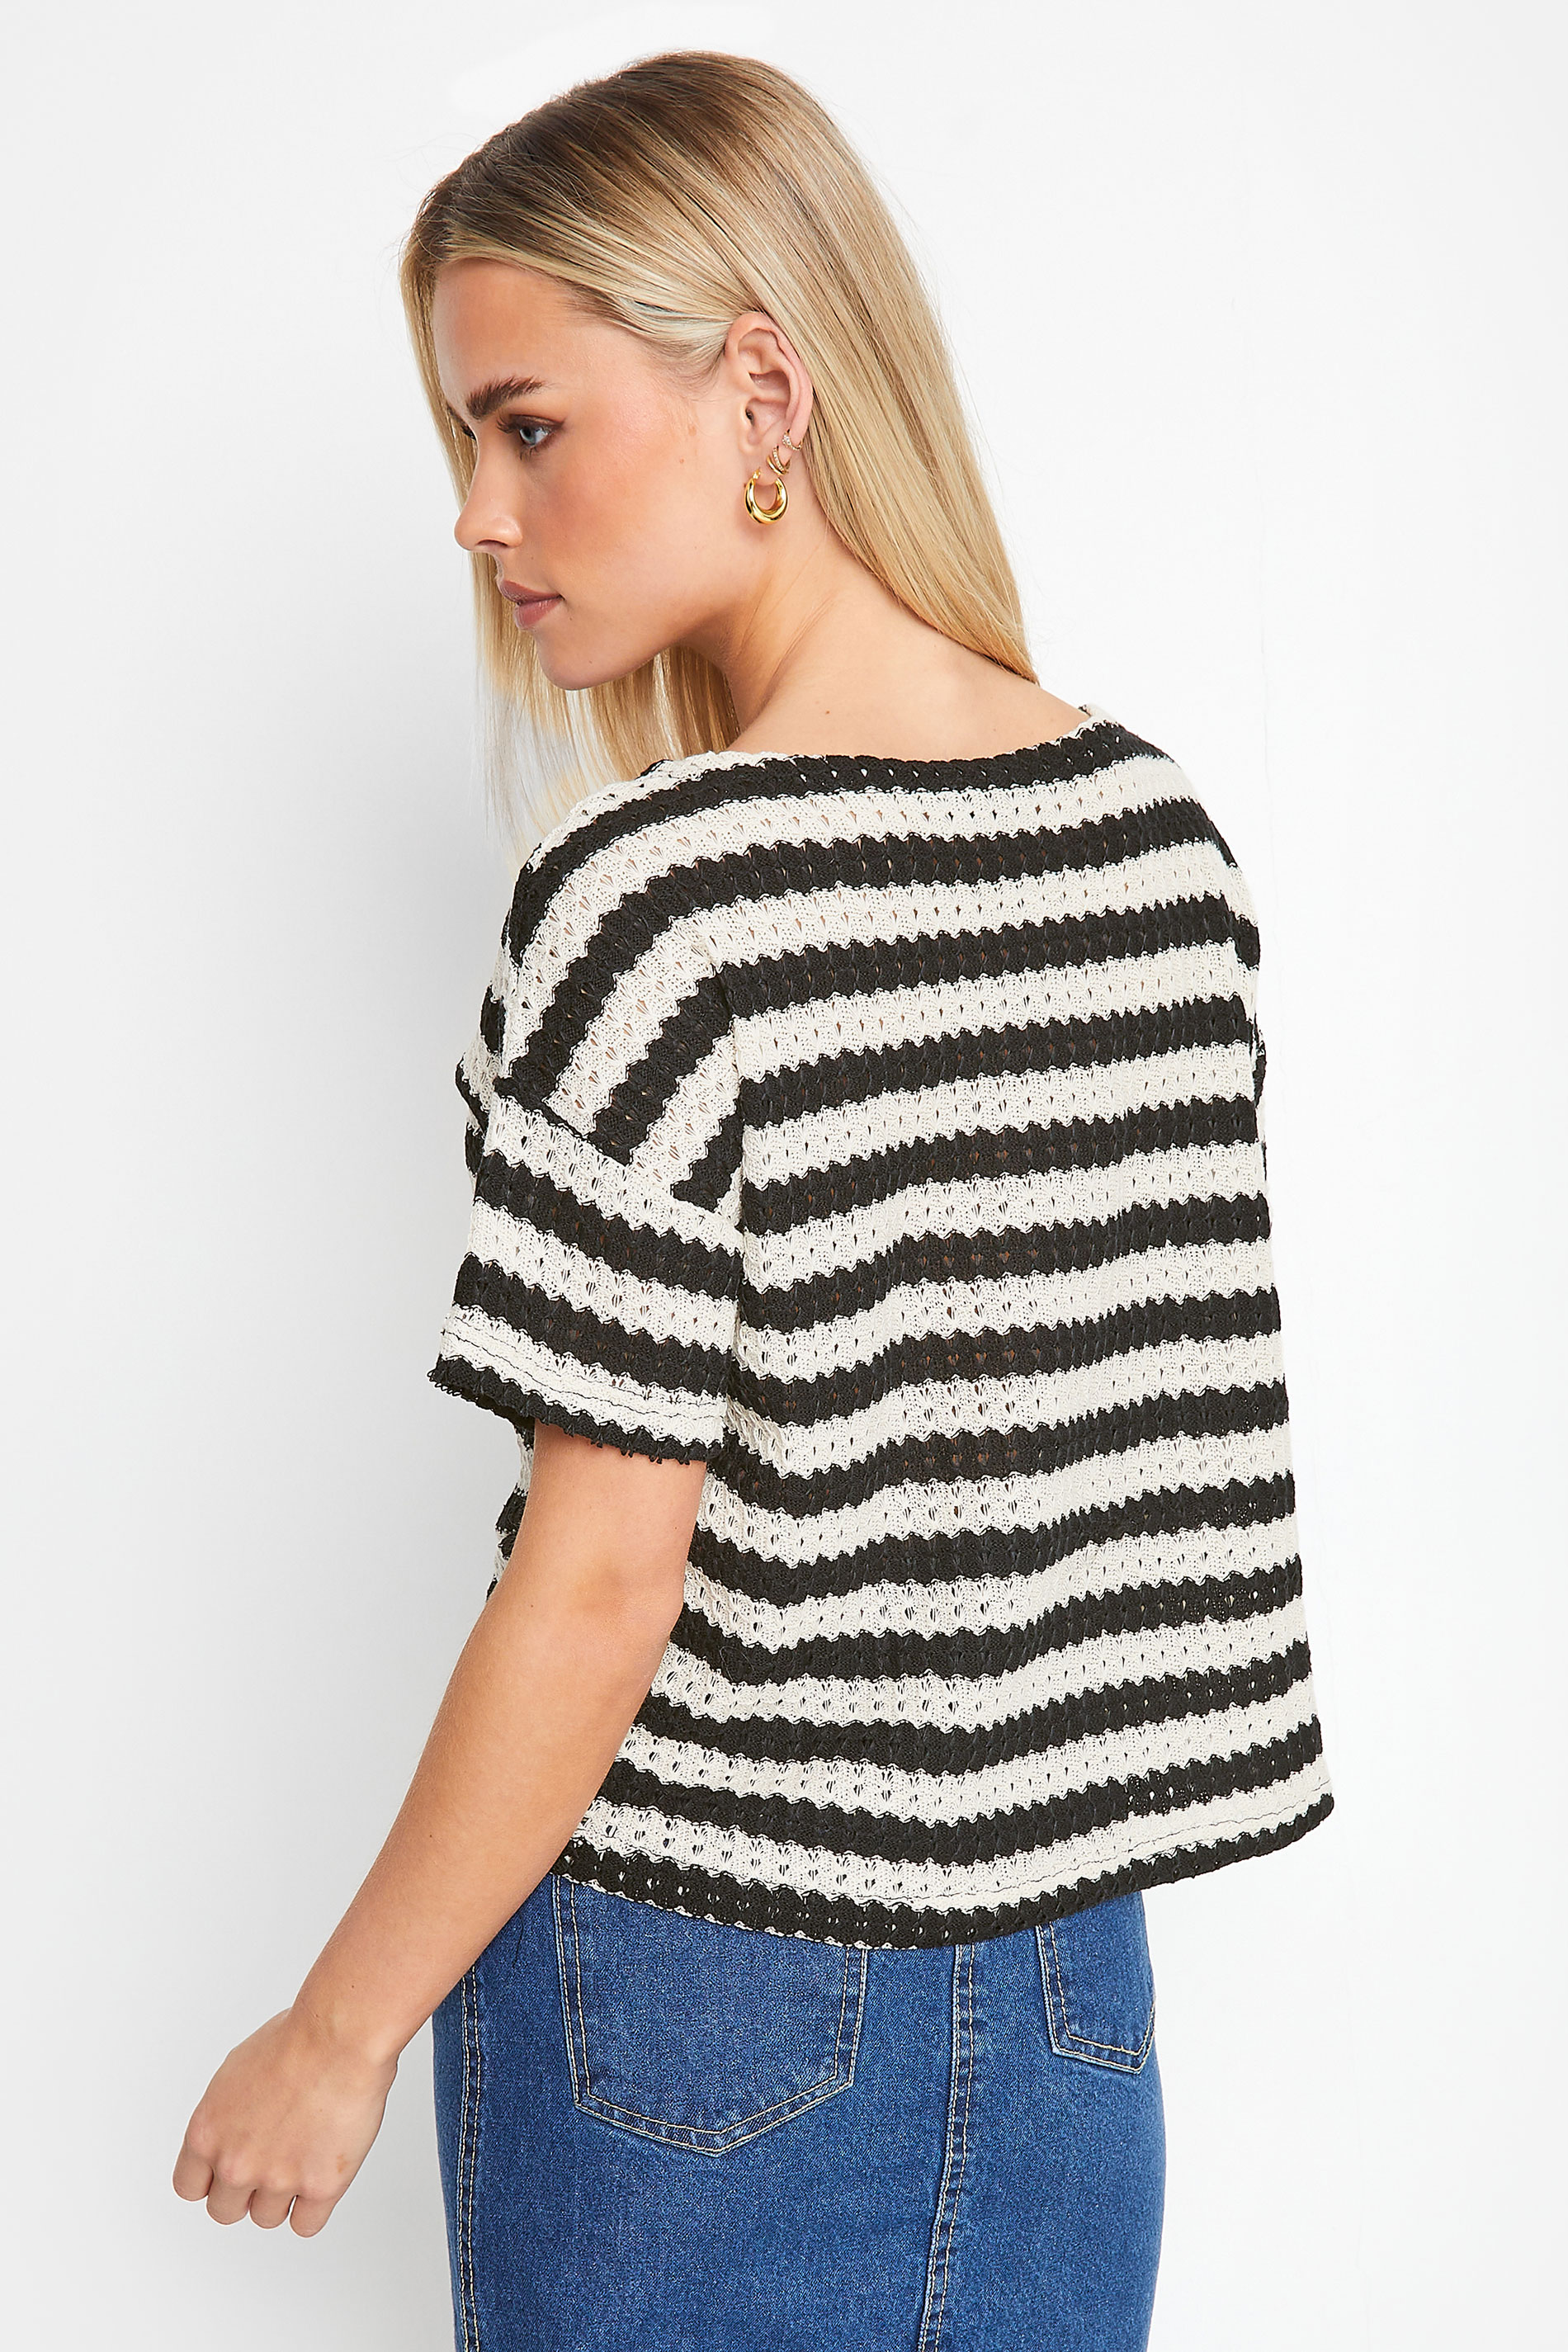 PixieGirl Petite Women's Black & White Stripe Crochet T-Shirt | PixieGirl 3